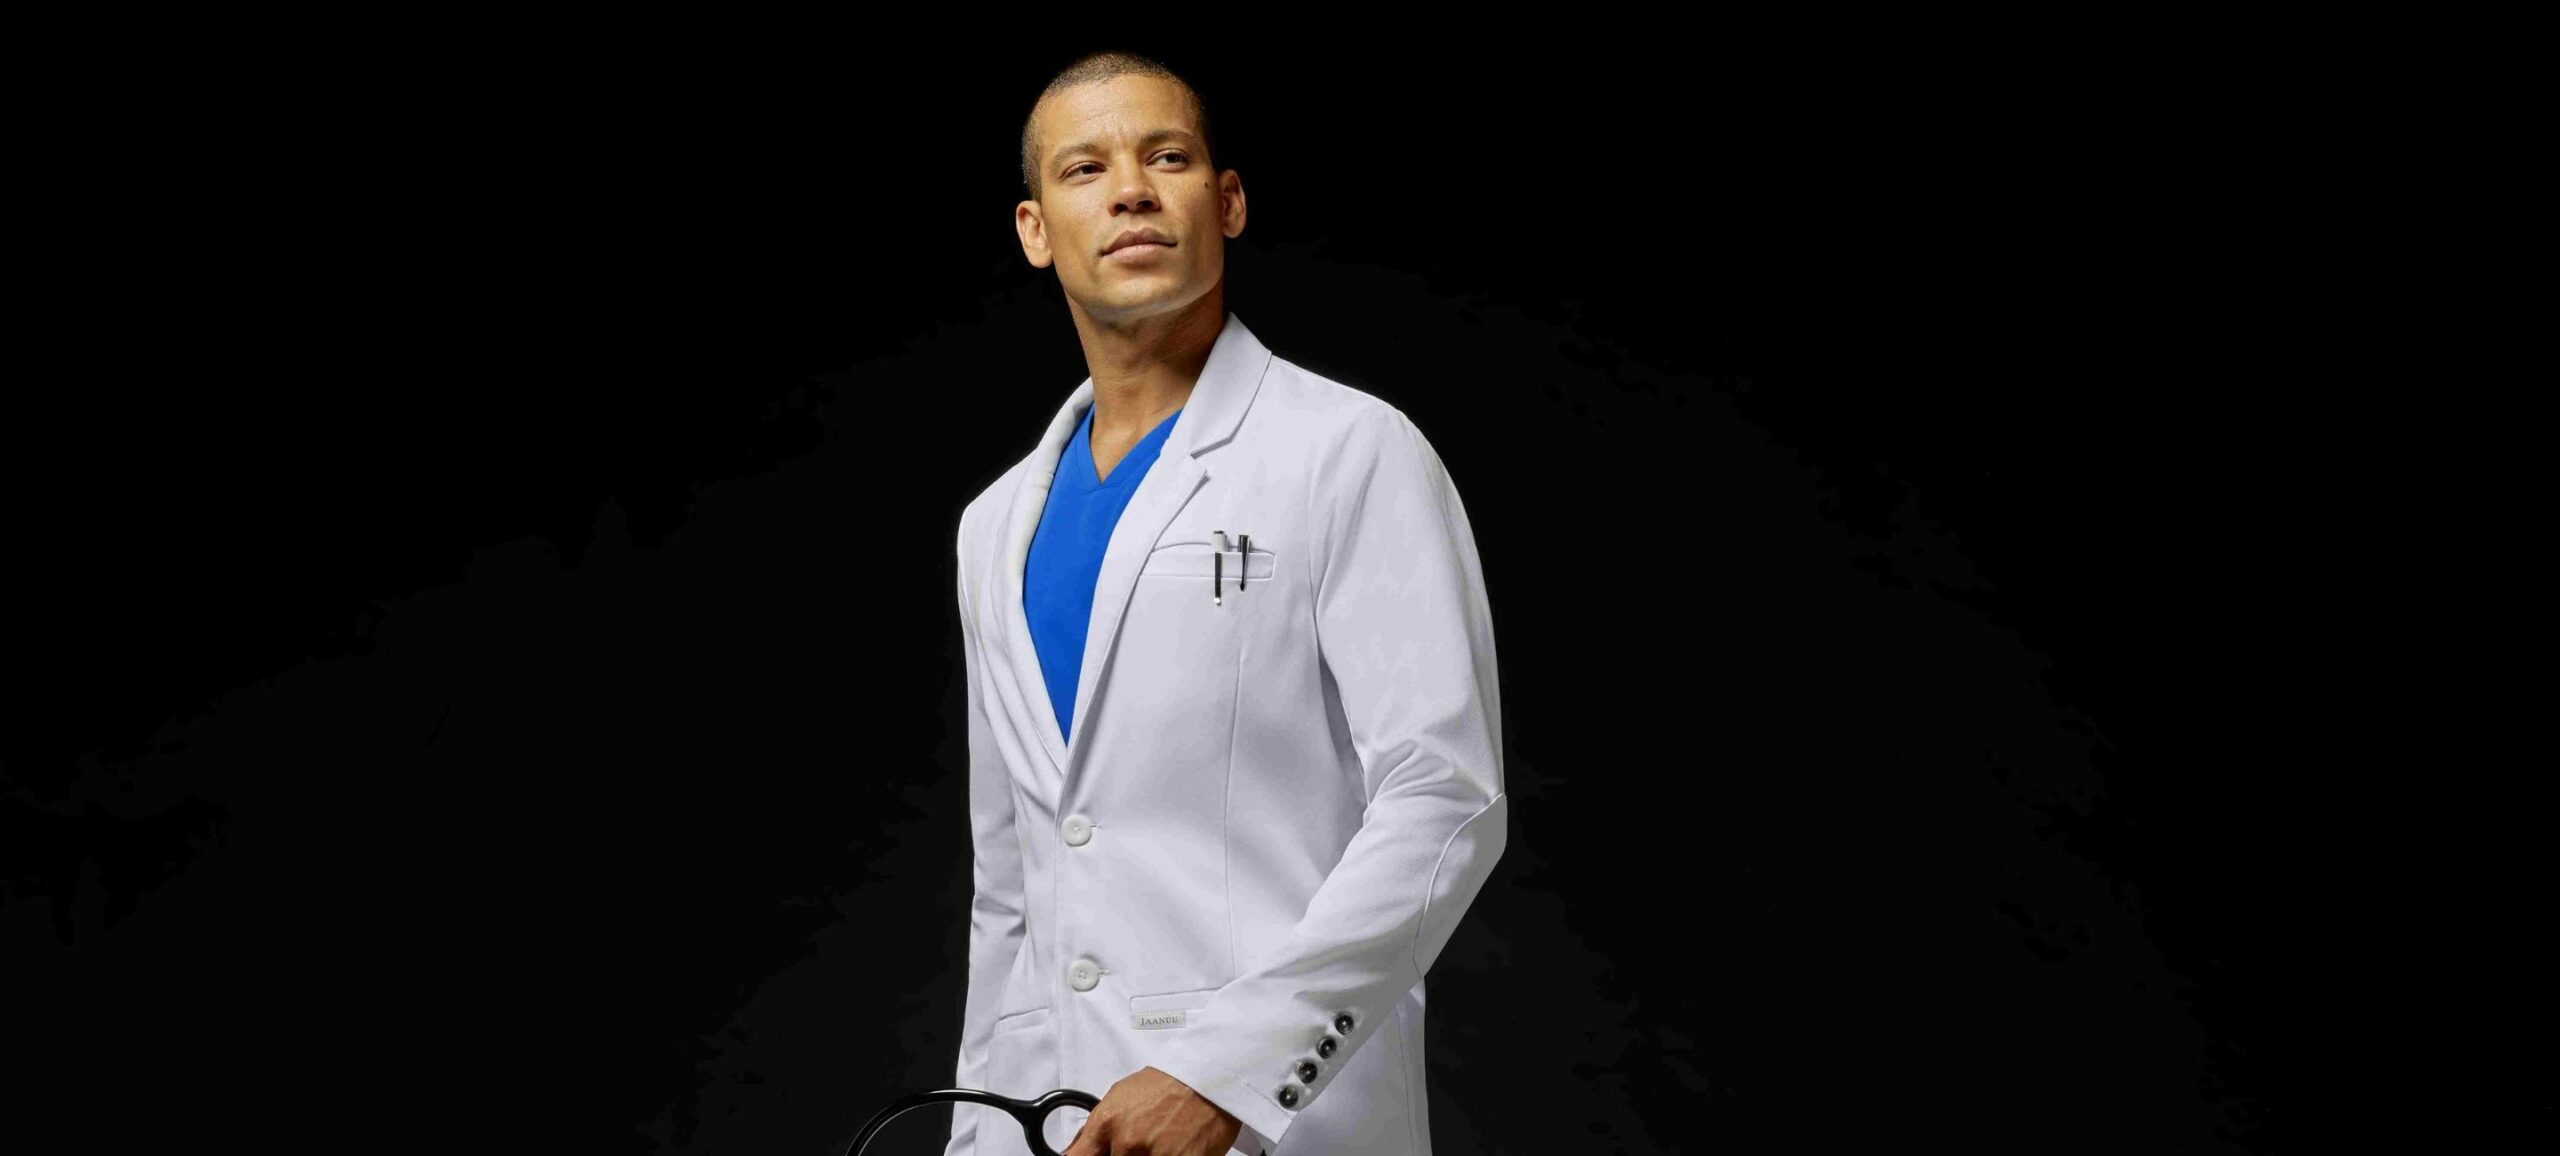 Hospital Uniforms - Surgeon Gowns, Scrub Suits, Lab Coats